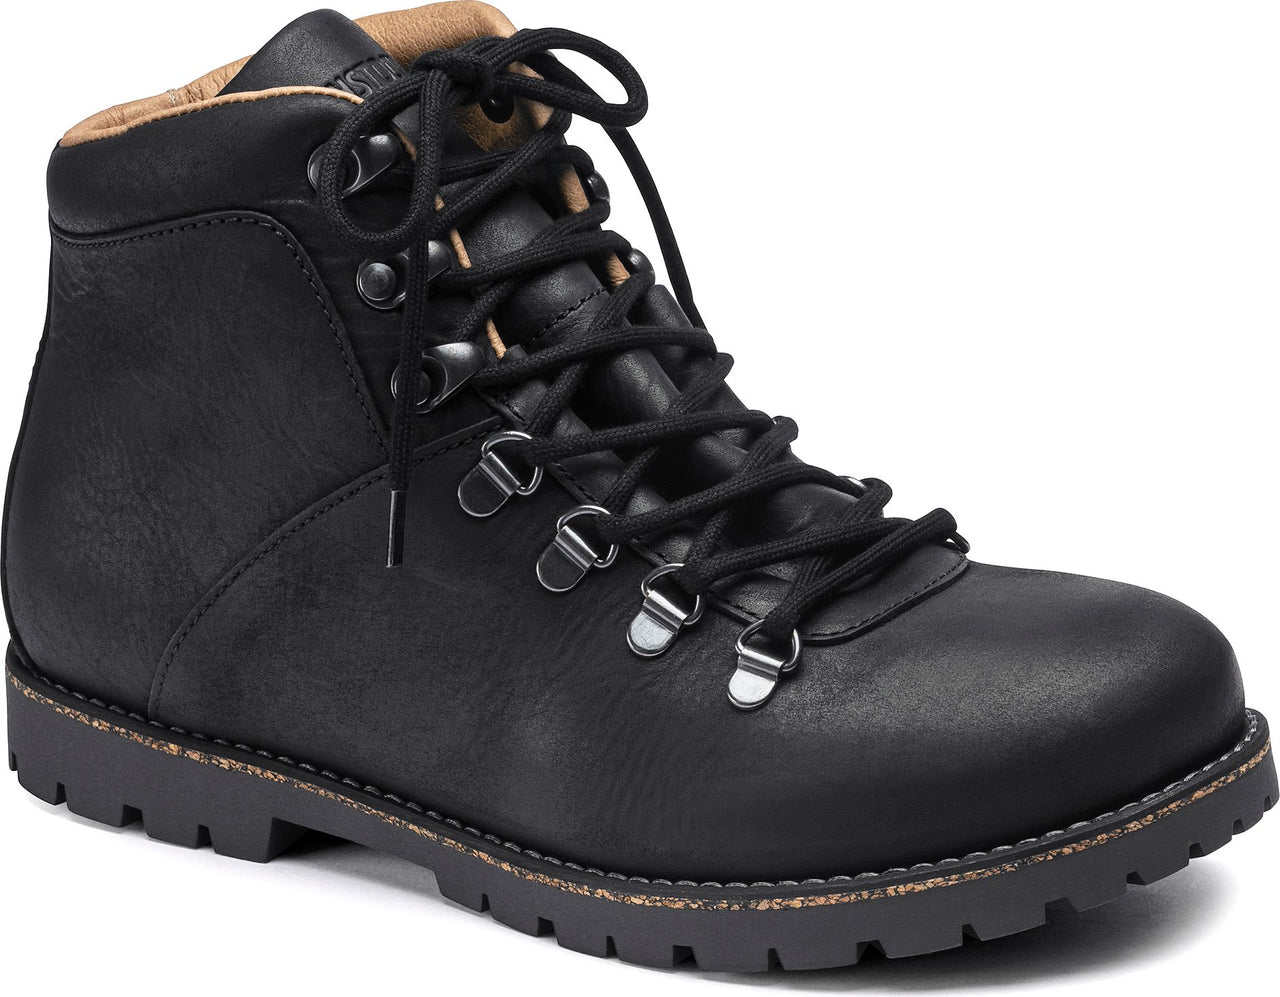 Birkenstock Boots Jackson Black - Regular Fit